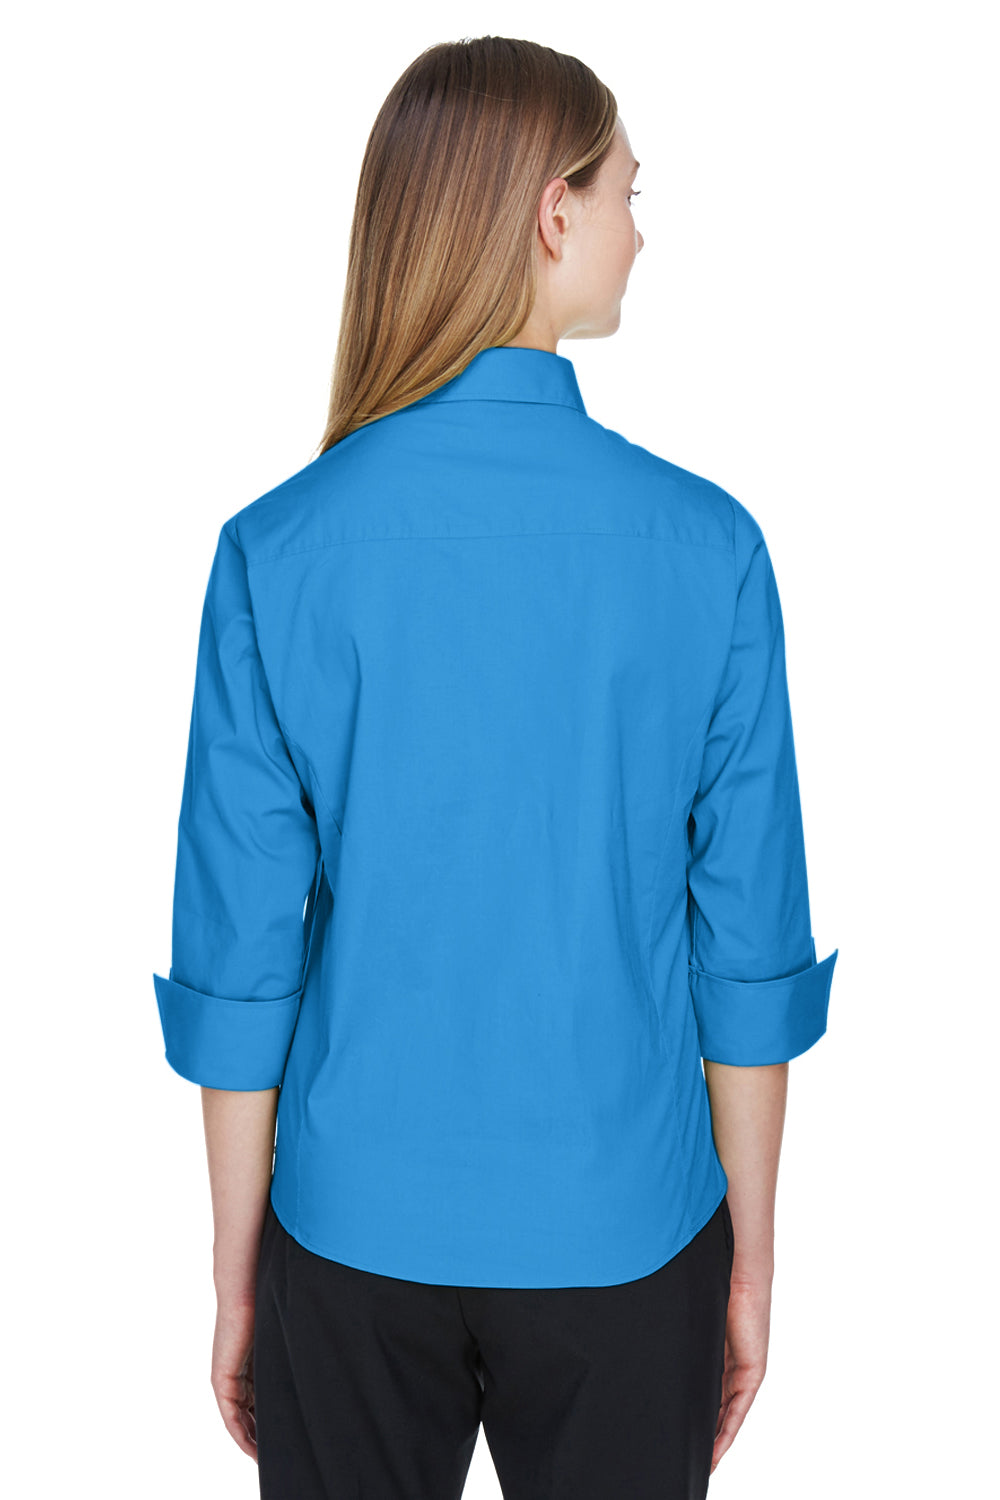 Devon & Jones DP625W Womens Perfect Fit 3/4 Sleeve Button Down Shirt French Blue Back